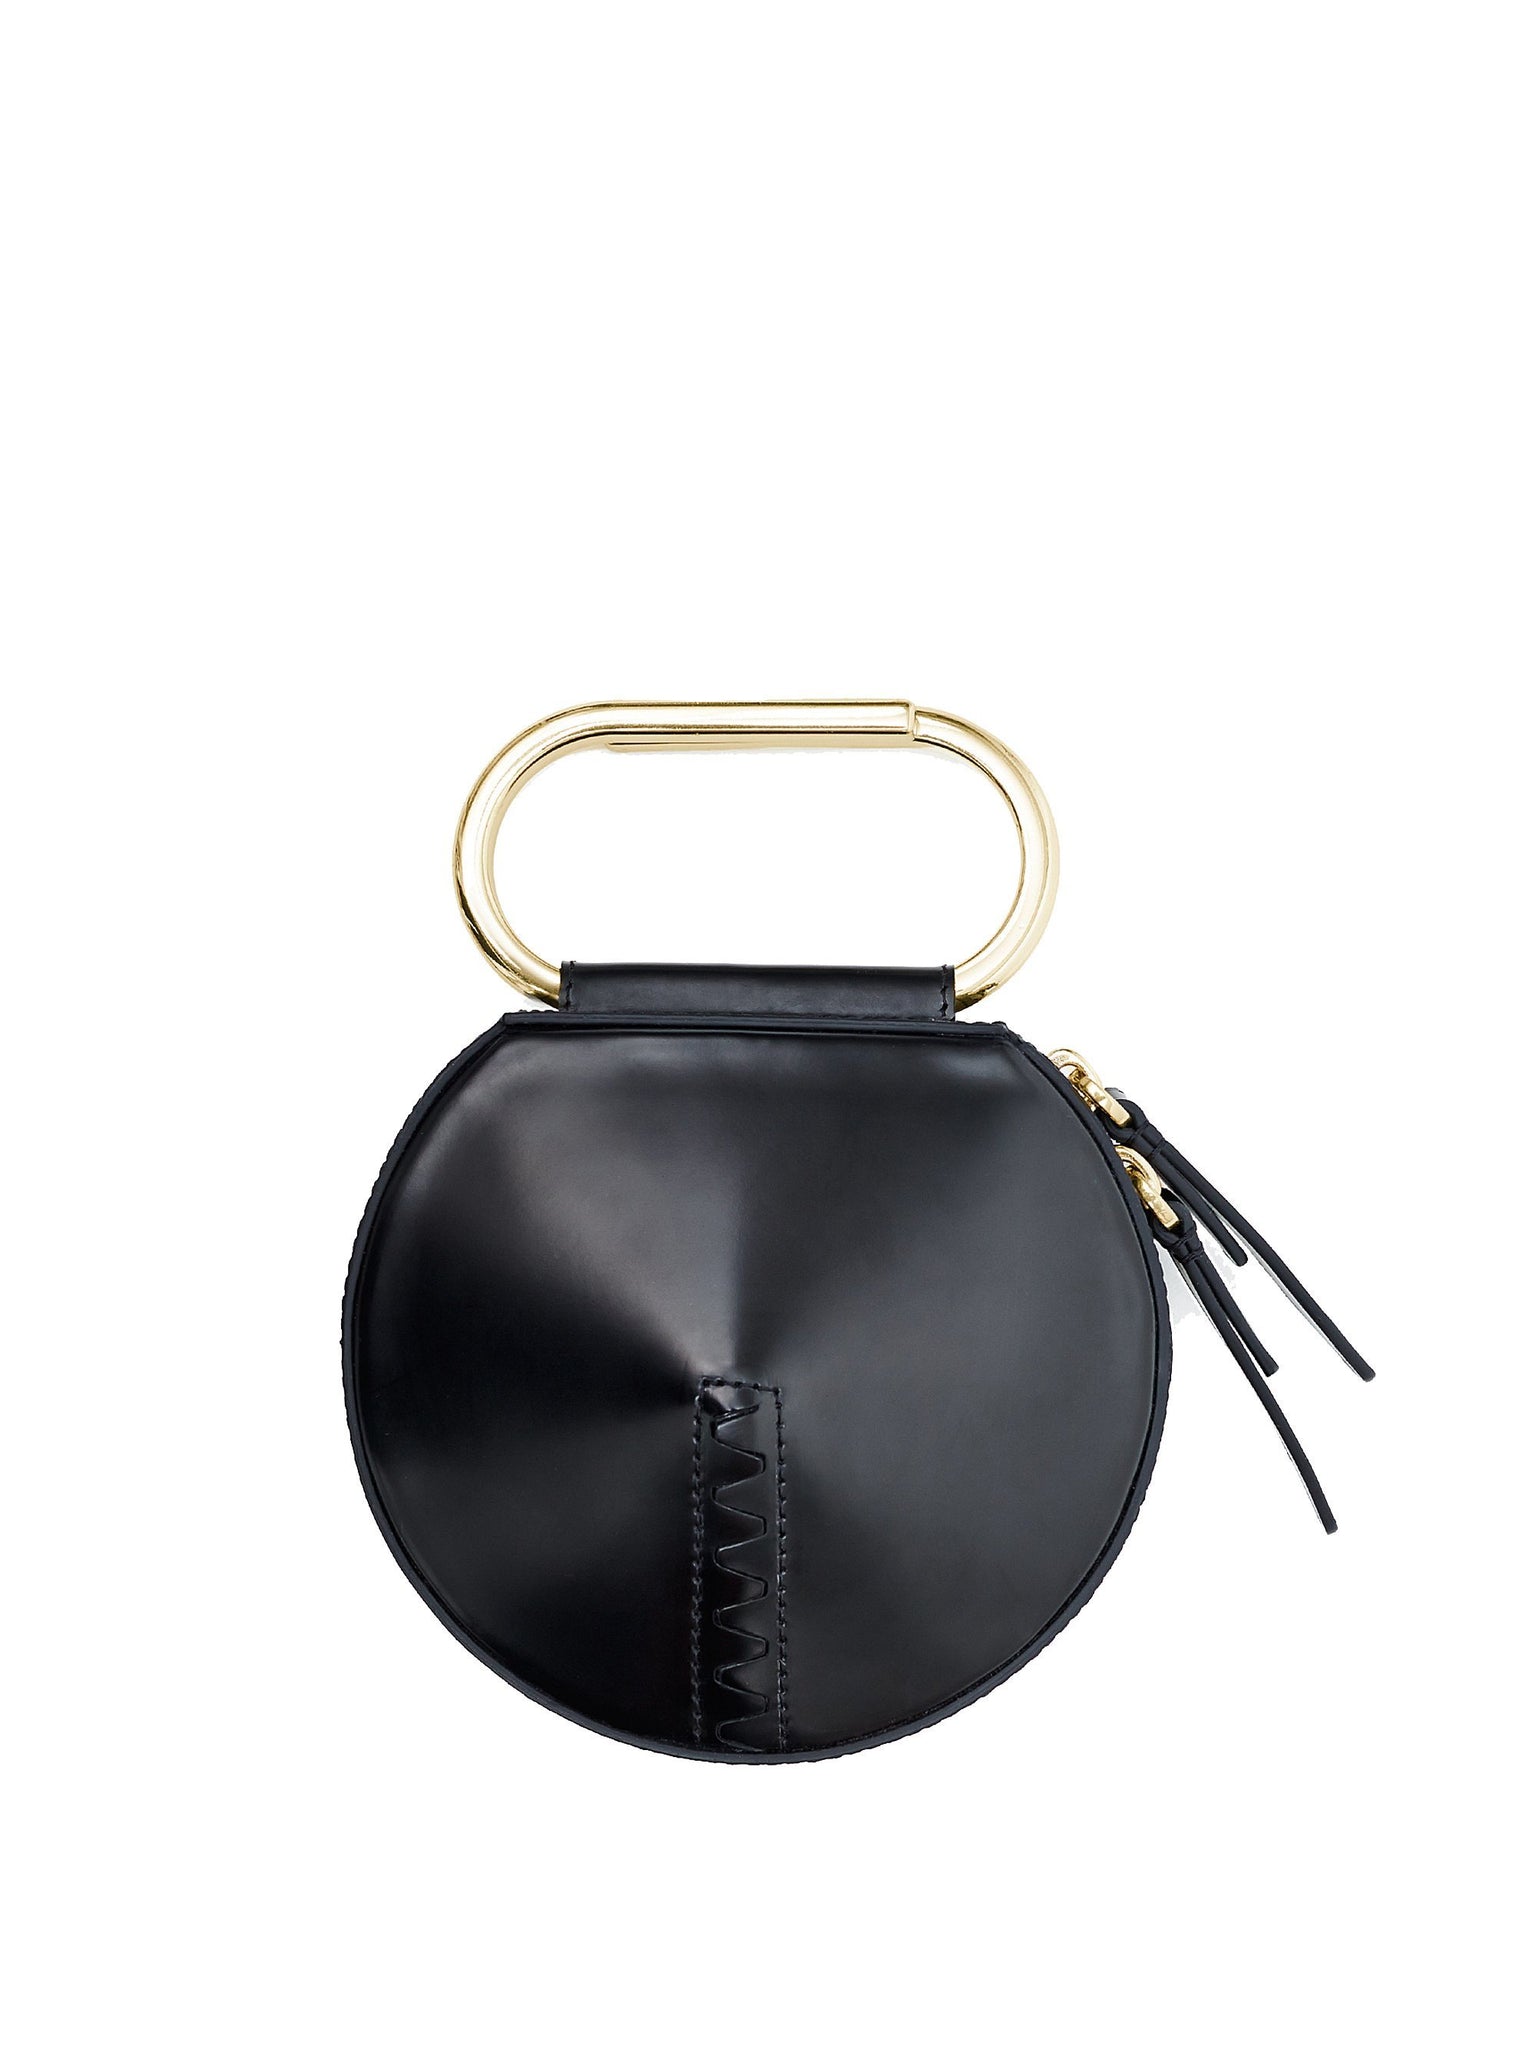 Latest Obsession: 3.1 Phillip Lim Alix Bag - PurseBlog  Cheap louis vuitton  handbags, Classy purses, Purple bags